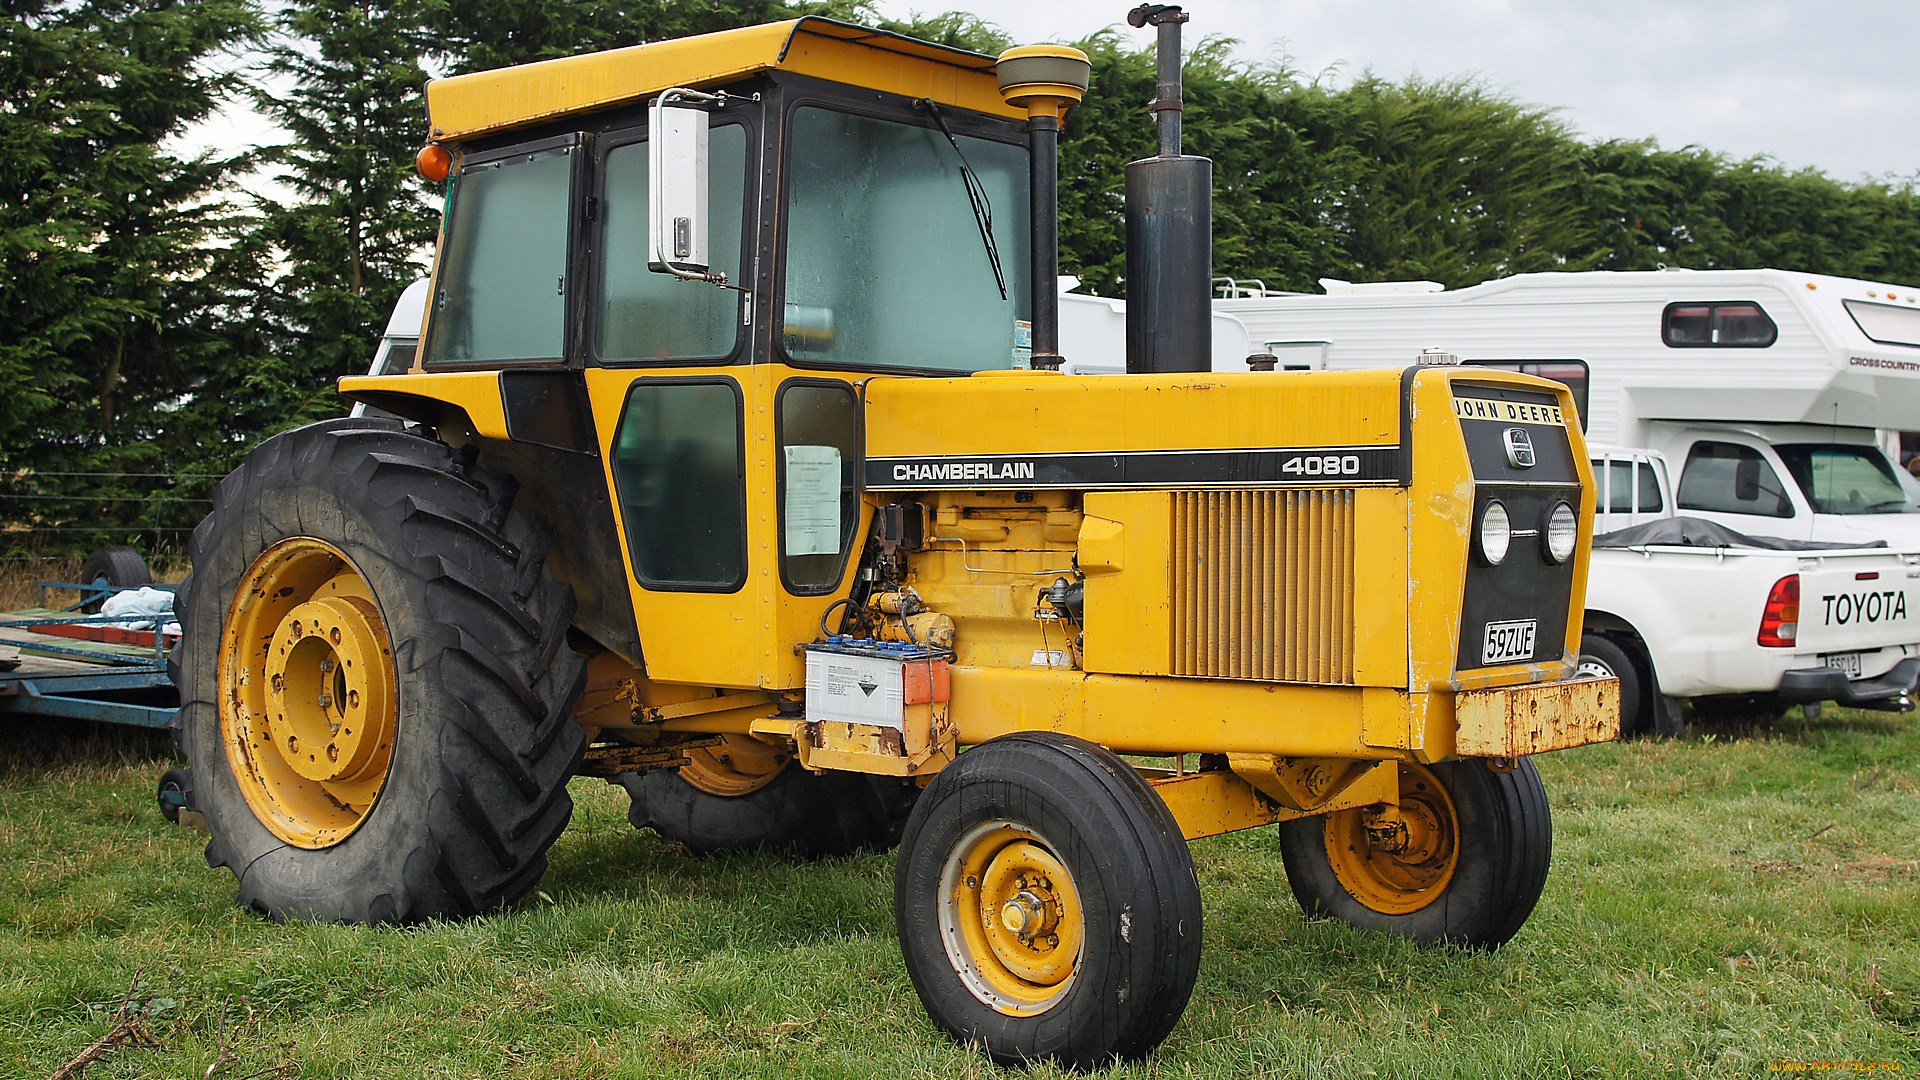 1978, chamberlain, 4080, tractor, техника, тракторы, колесный, трактор